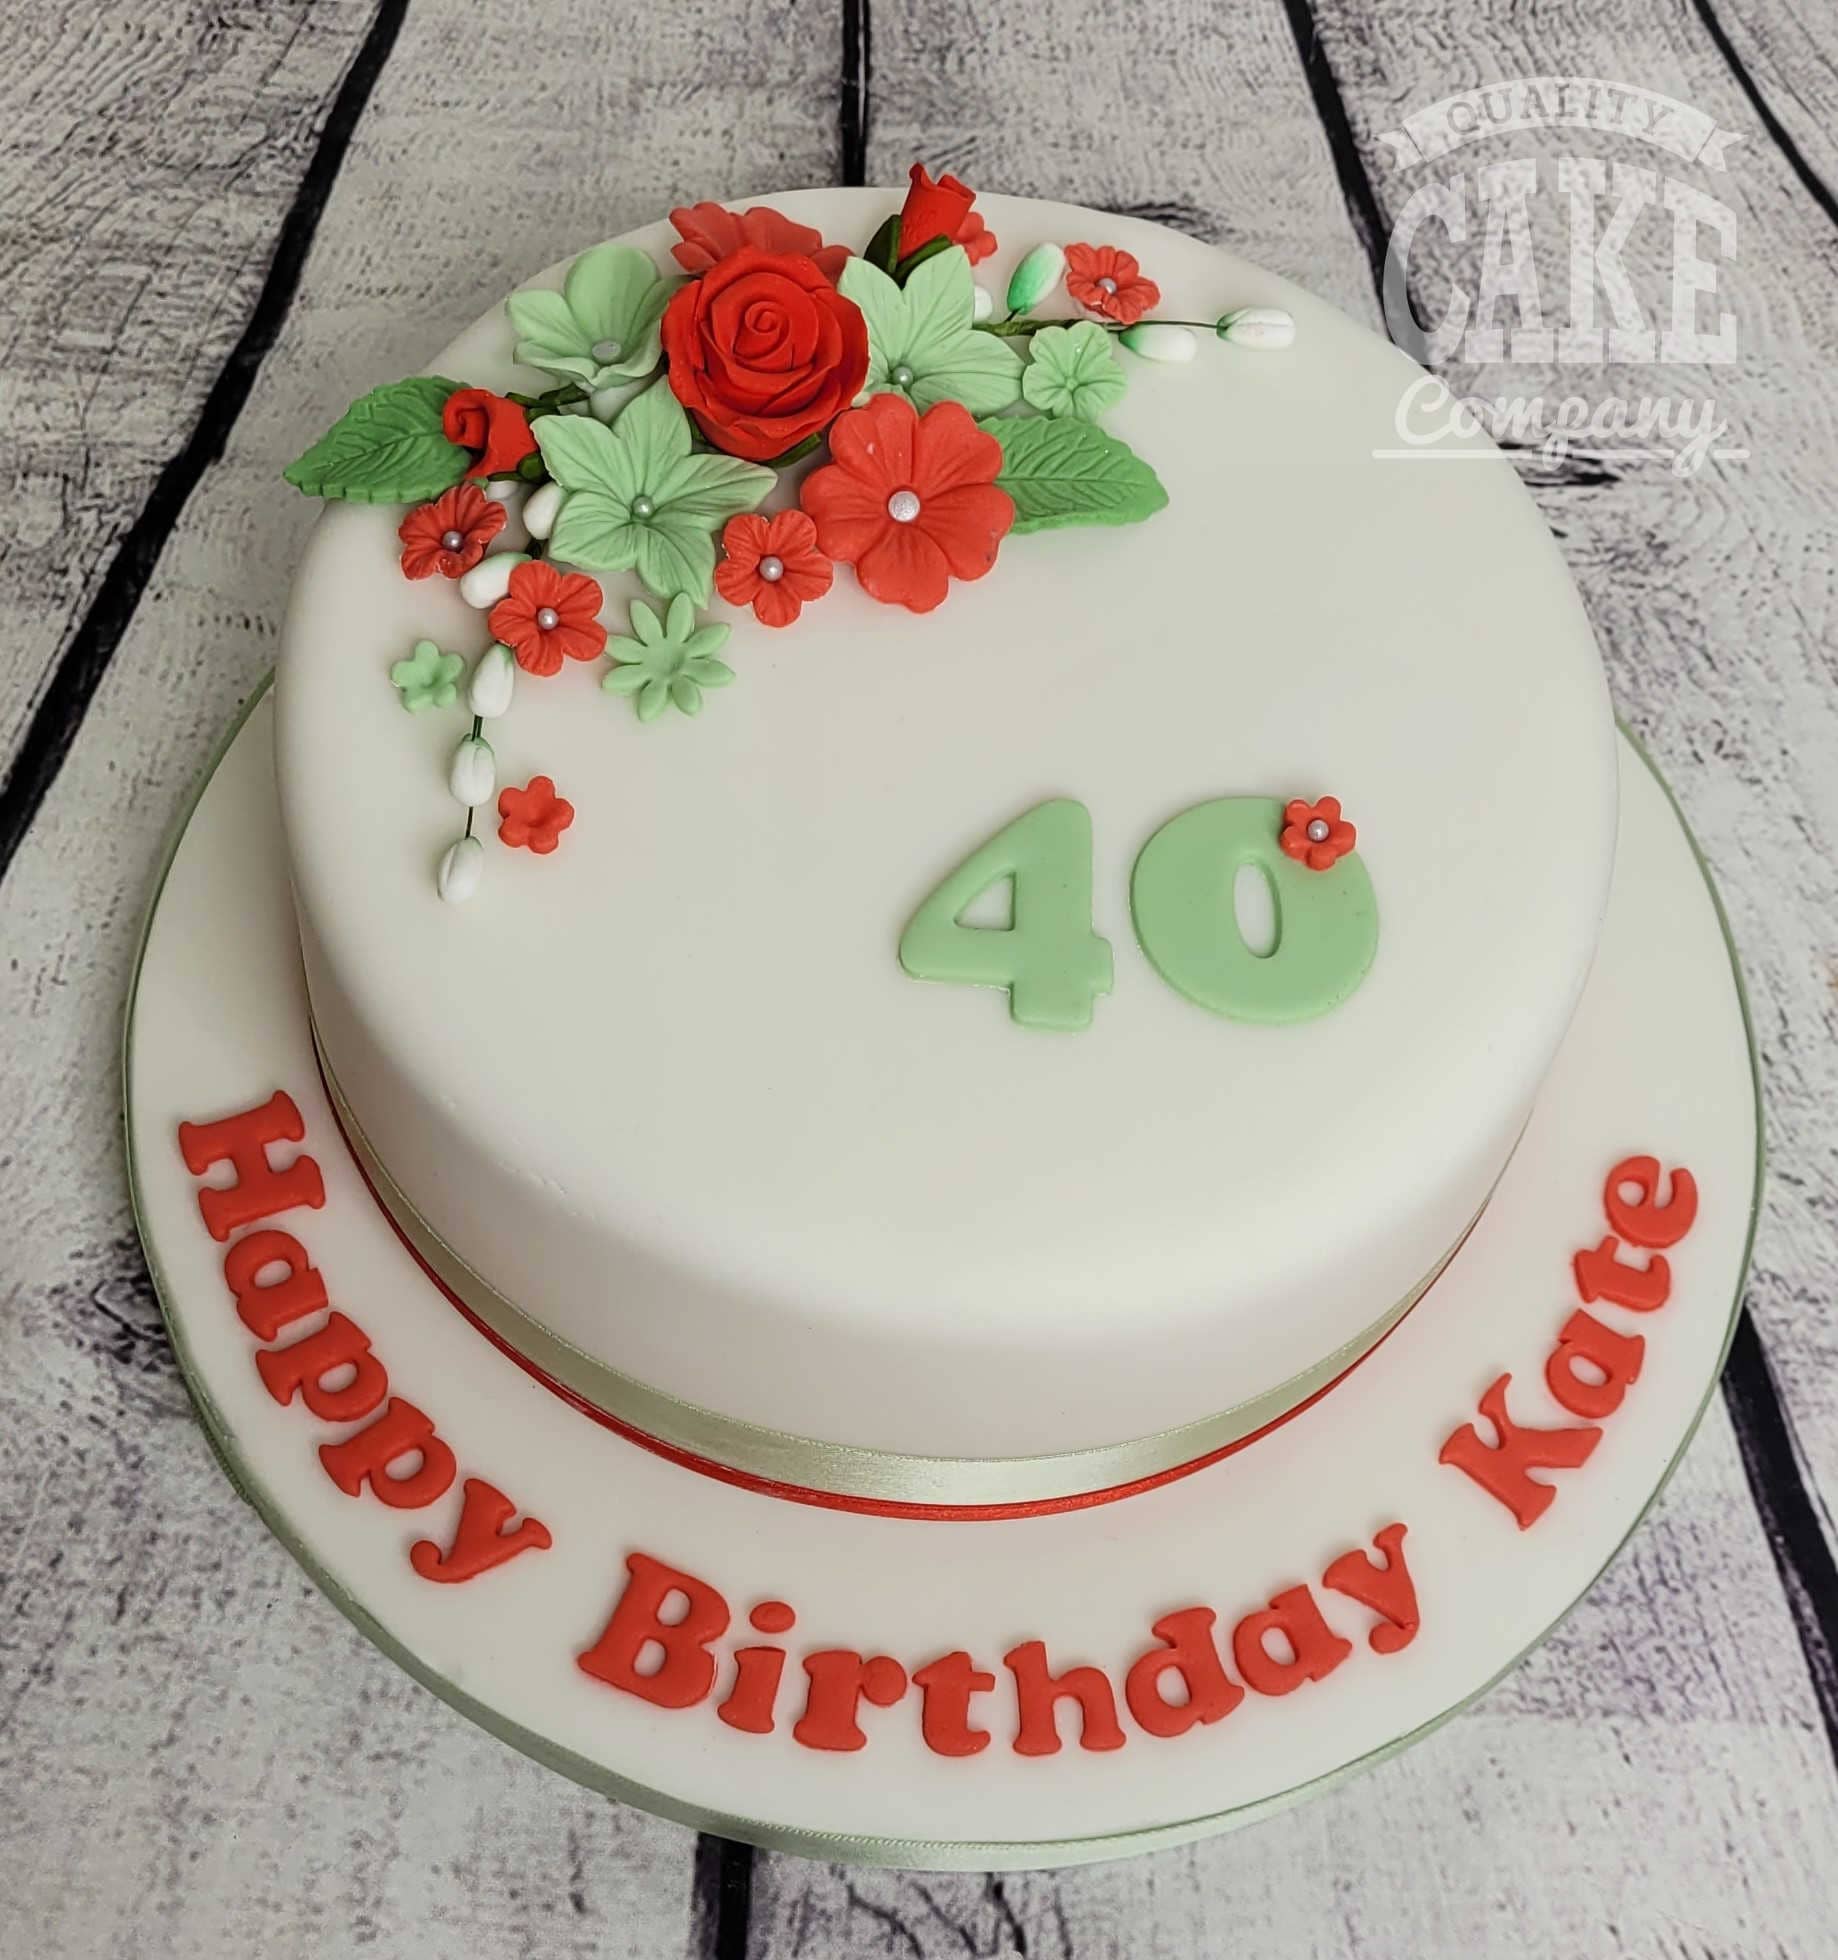 birthday cakes for men turning 40